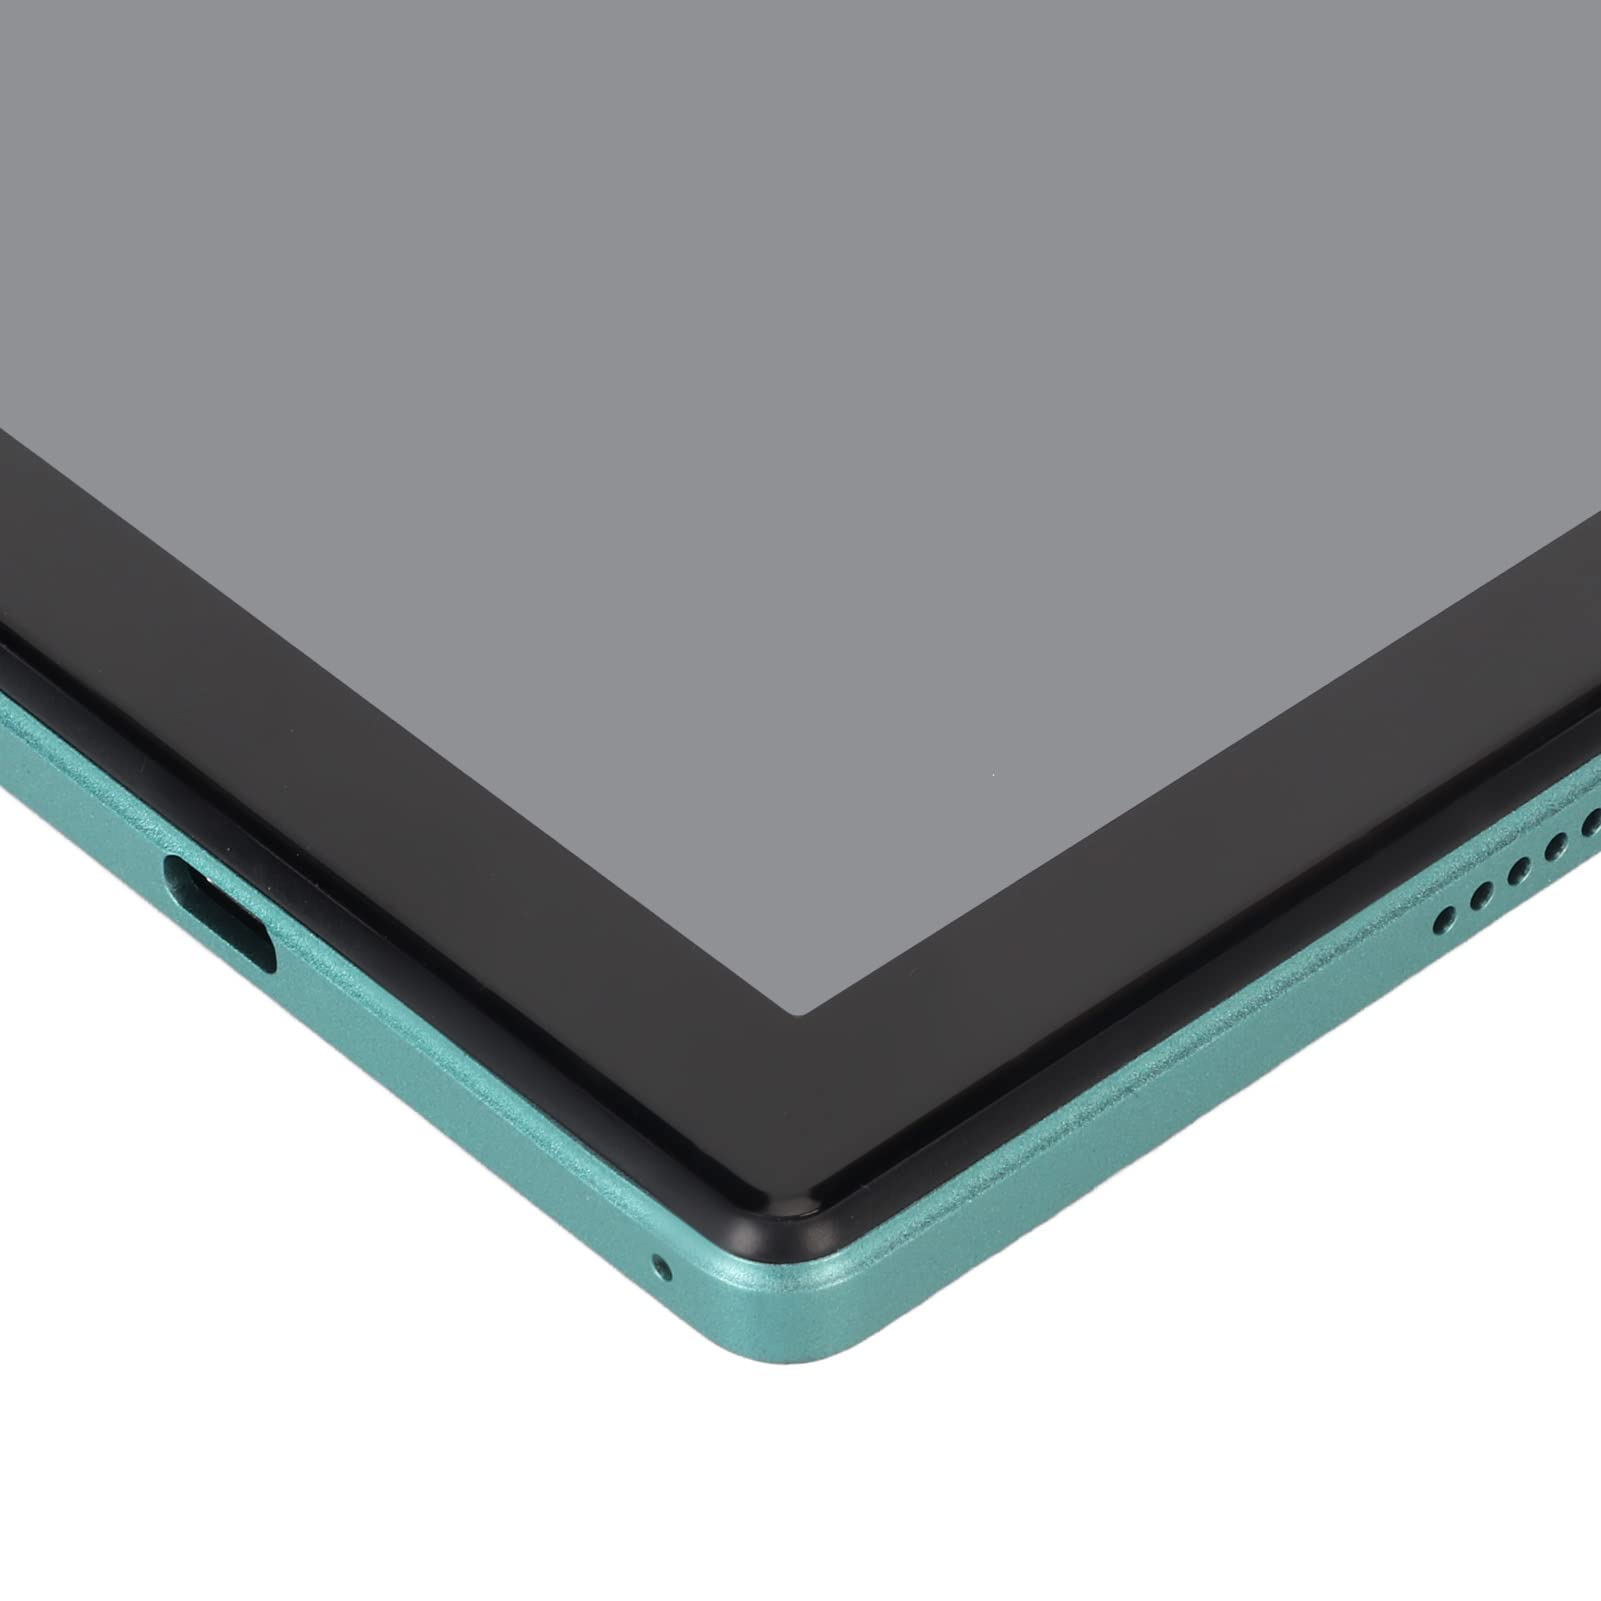 HEEPDD HD Tablet, Travel Green 10.1 Inch FHD Gaming Tablet Dual (US Plug)